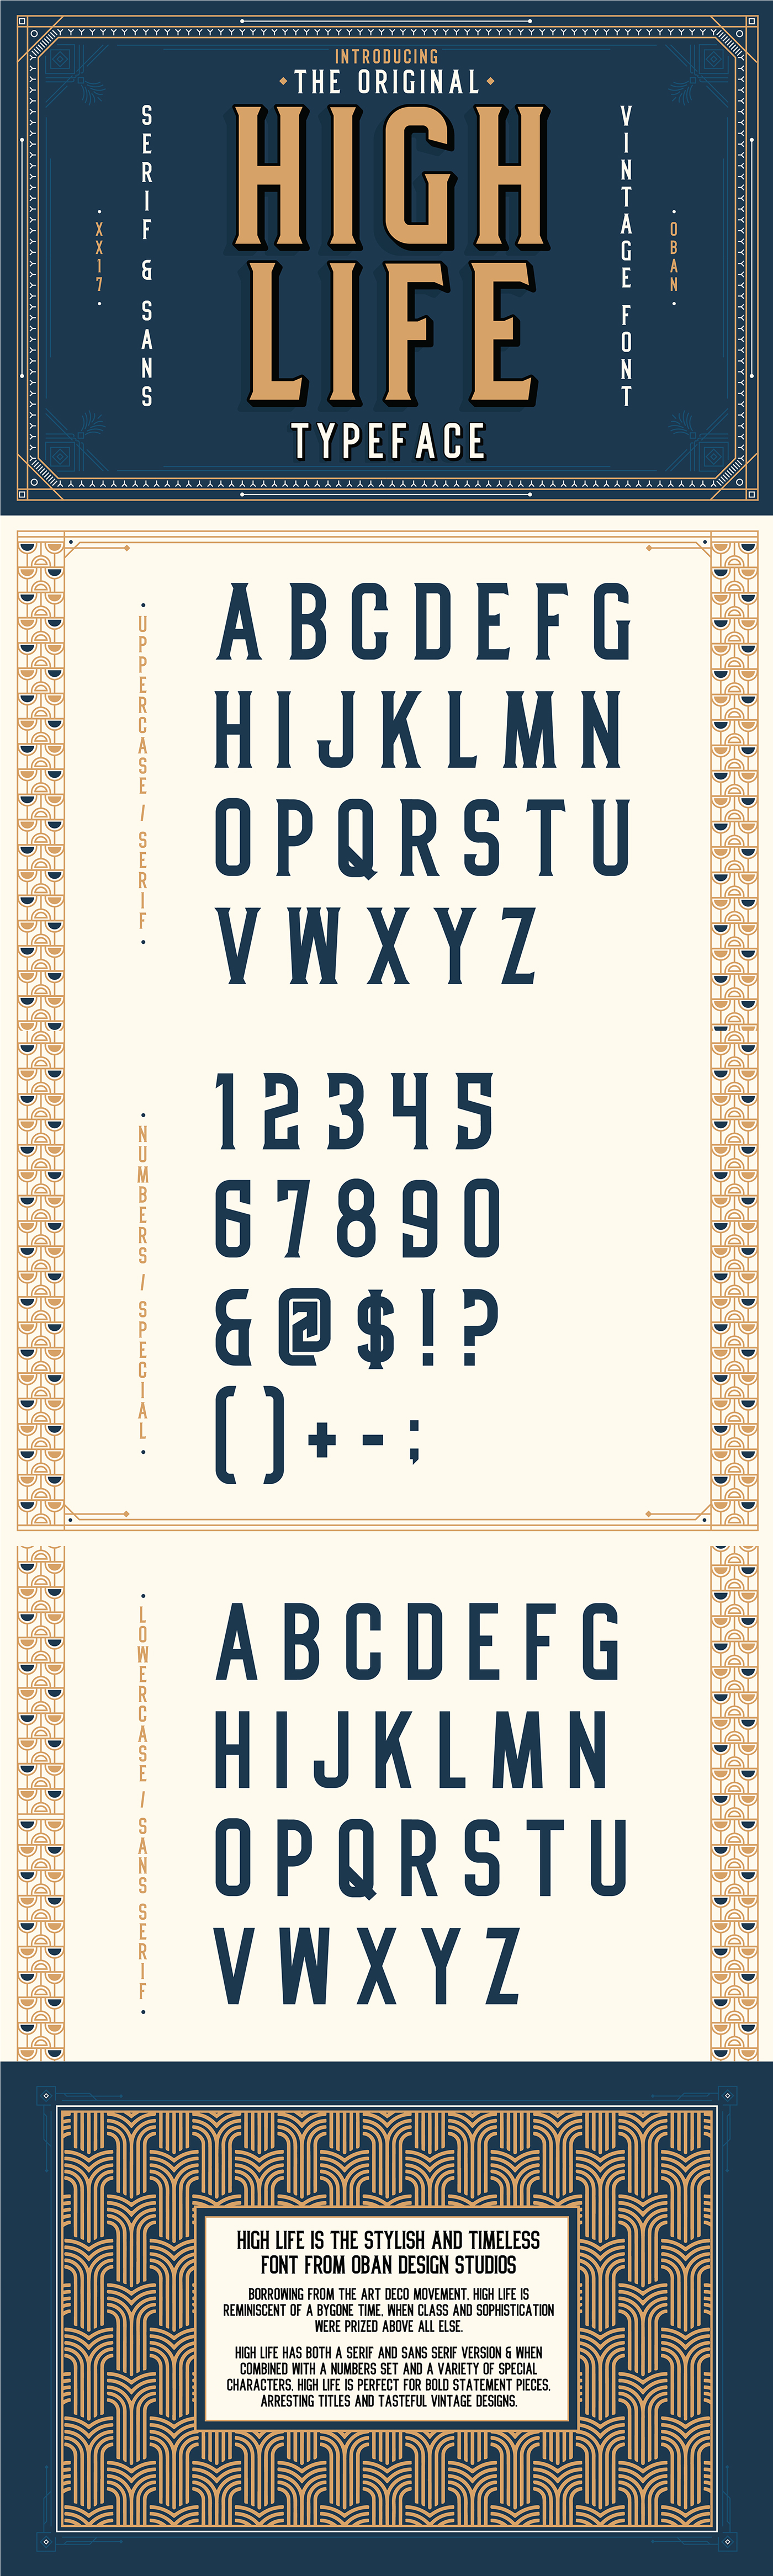 Free font free freebie free fonts freebies serif Typeface font type vintage